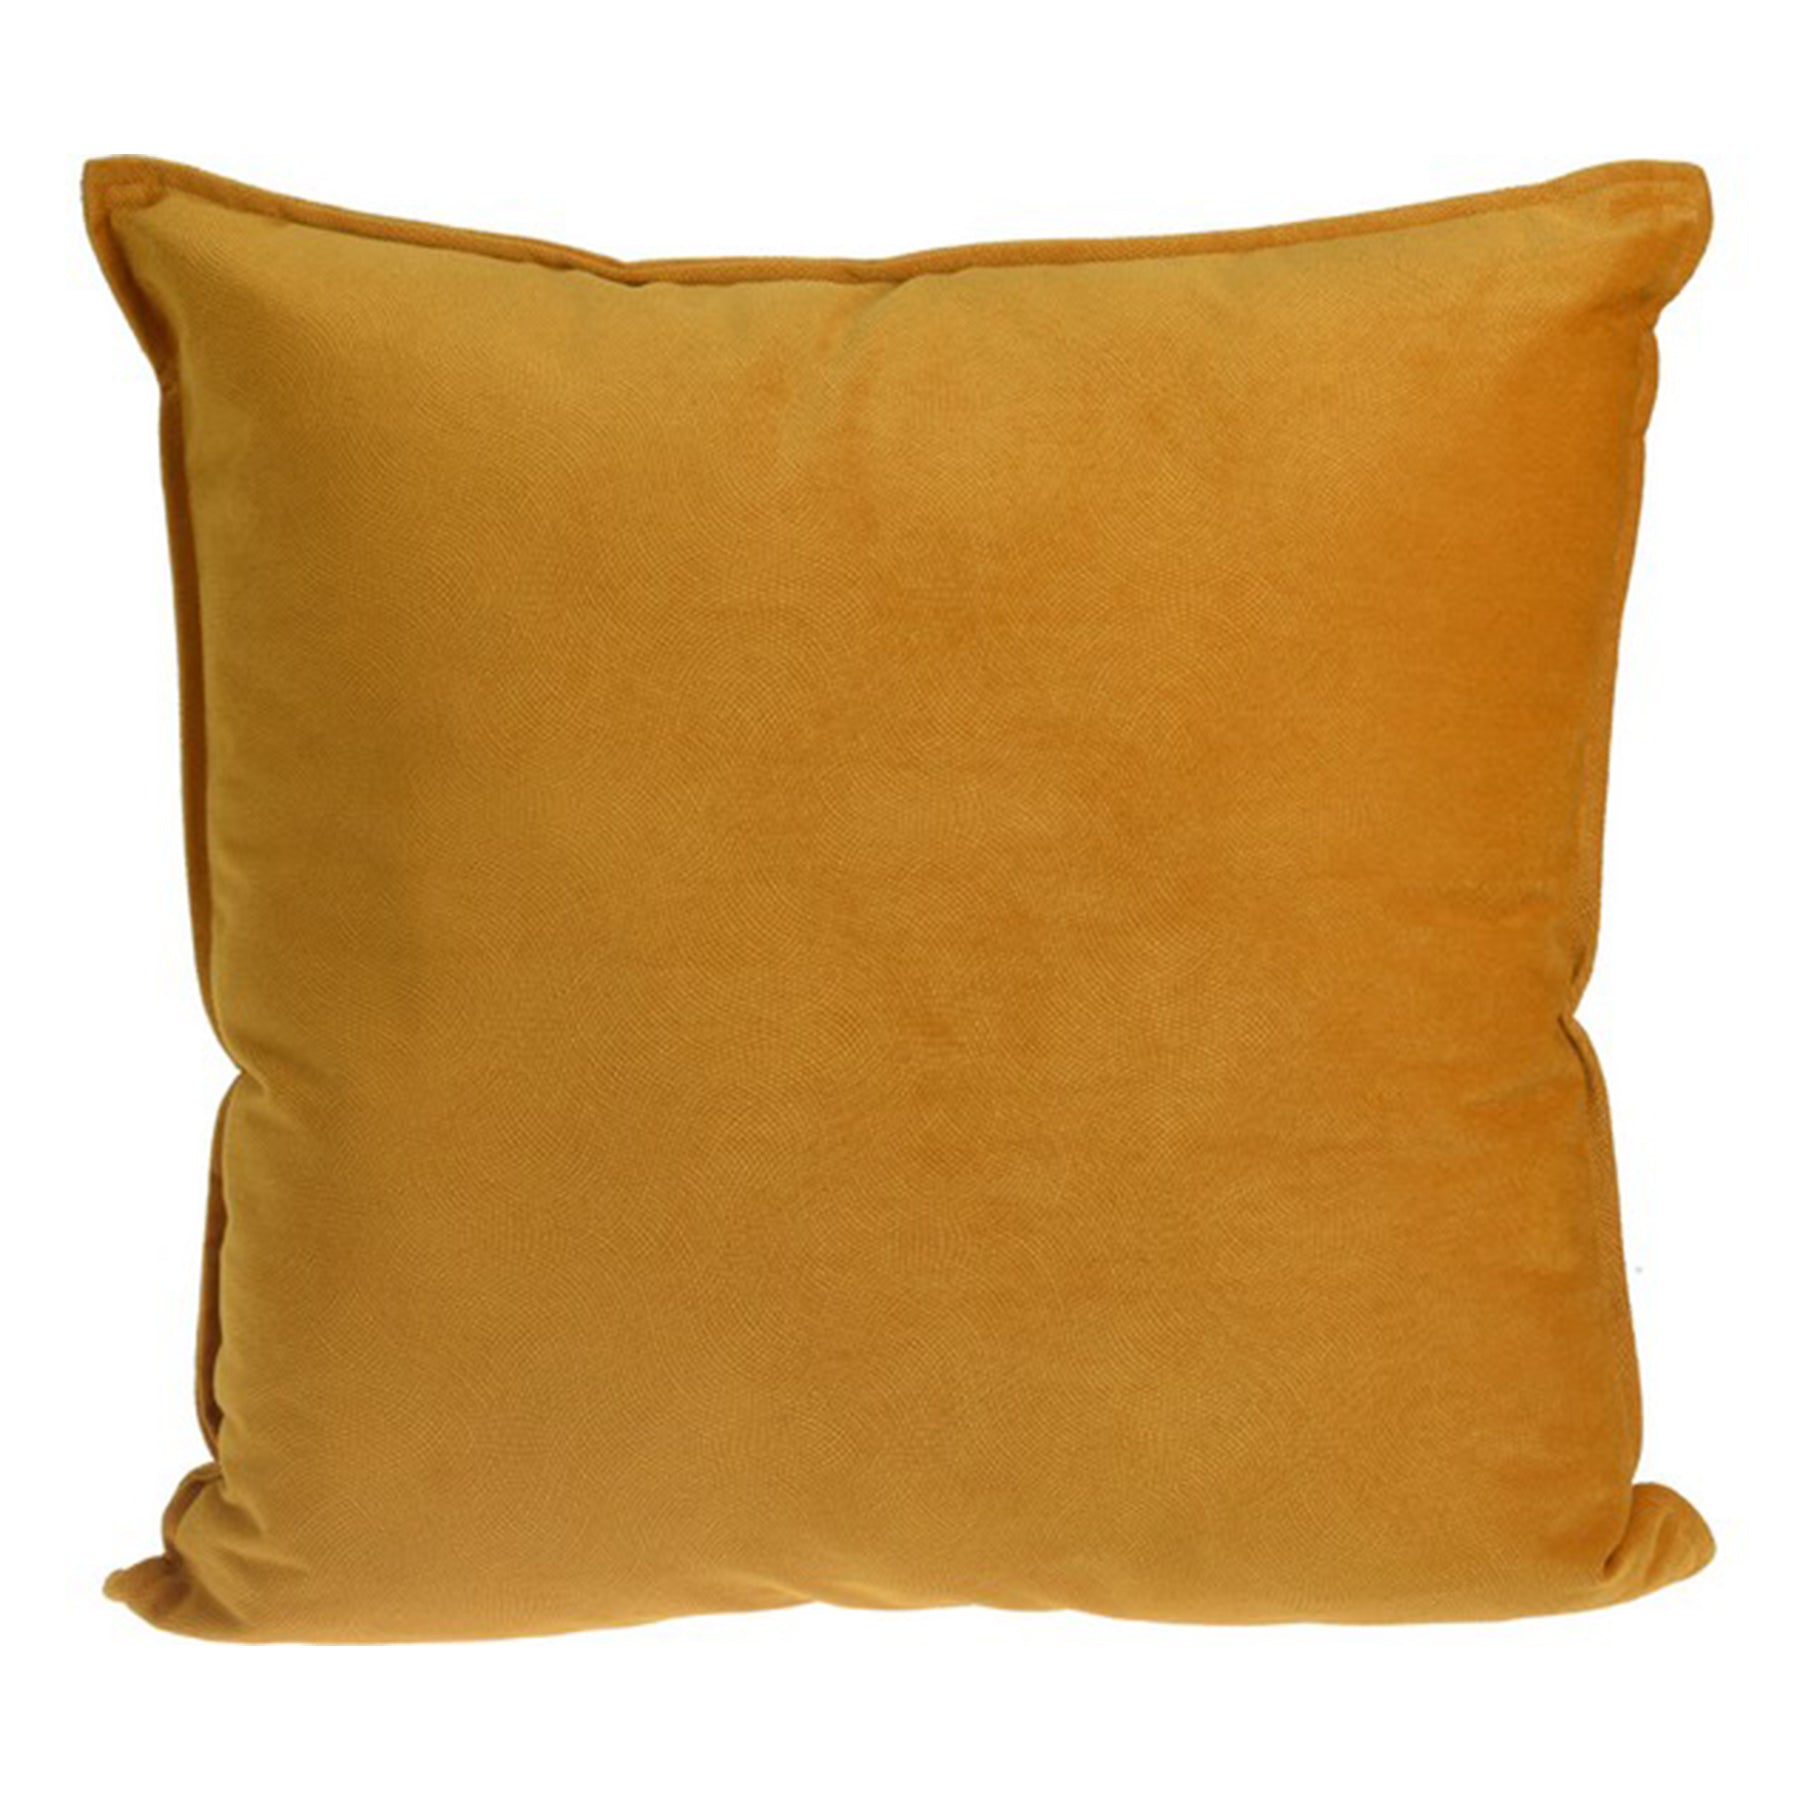 Decorative pillow - Orange